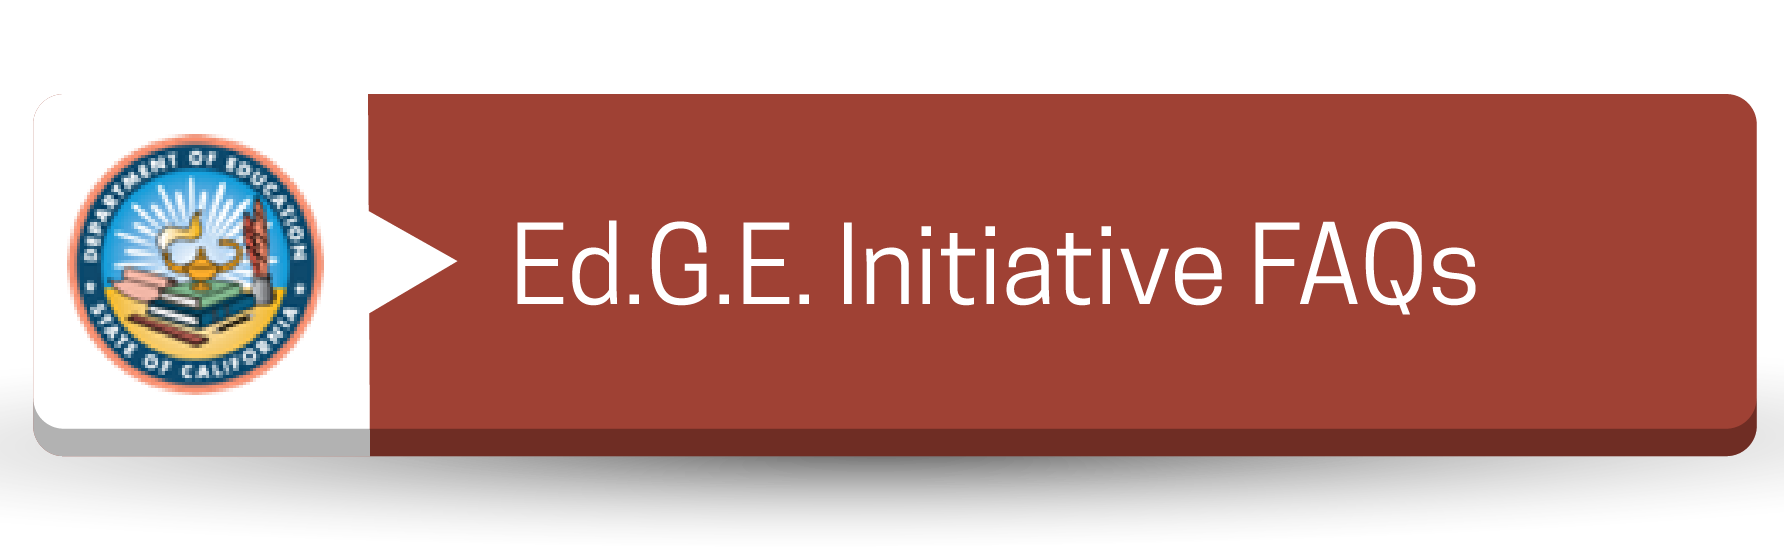 Global Economy Initiative FAQ - Resources (CDE) Button